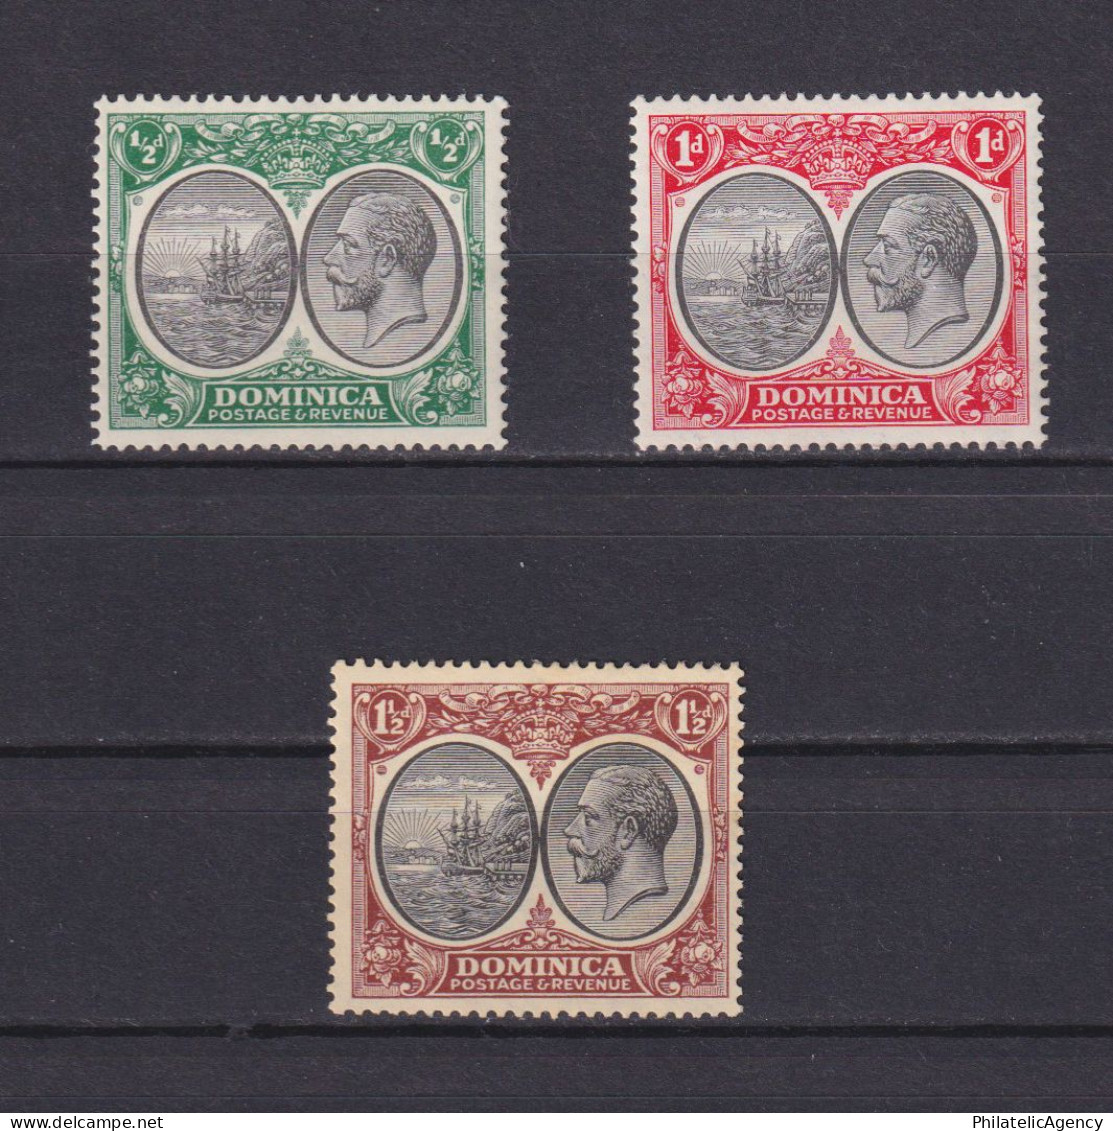 DOMINICA 1923, SG #71-75, CV £25, Part Set, MH - Dominica (...-1978)